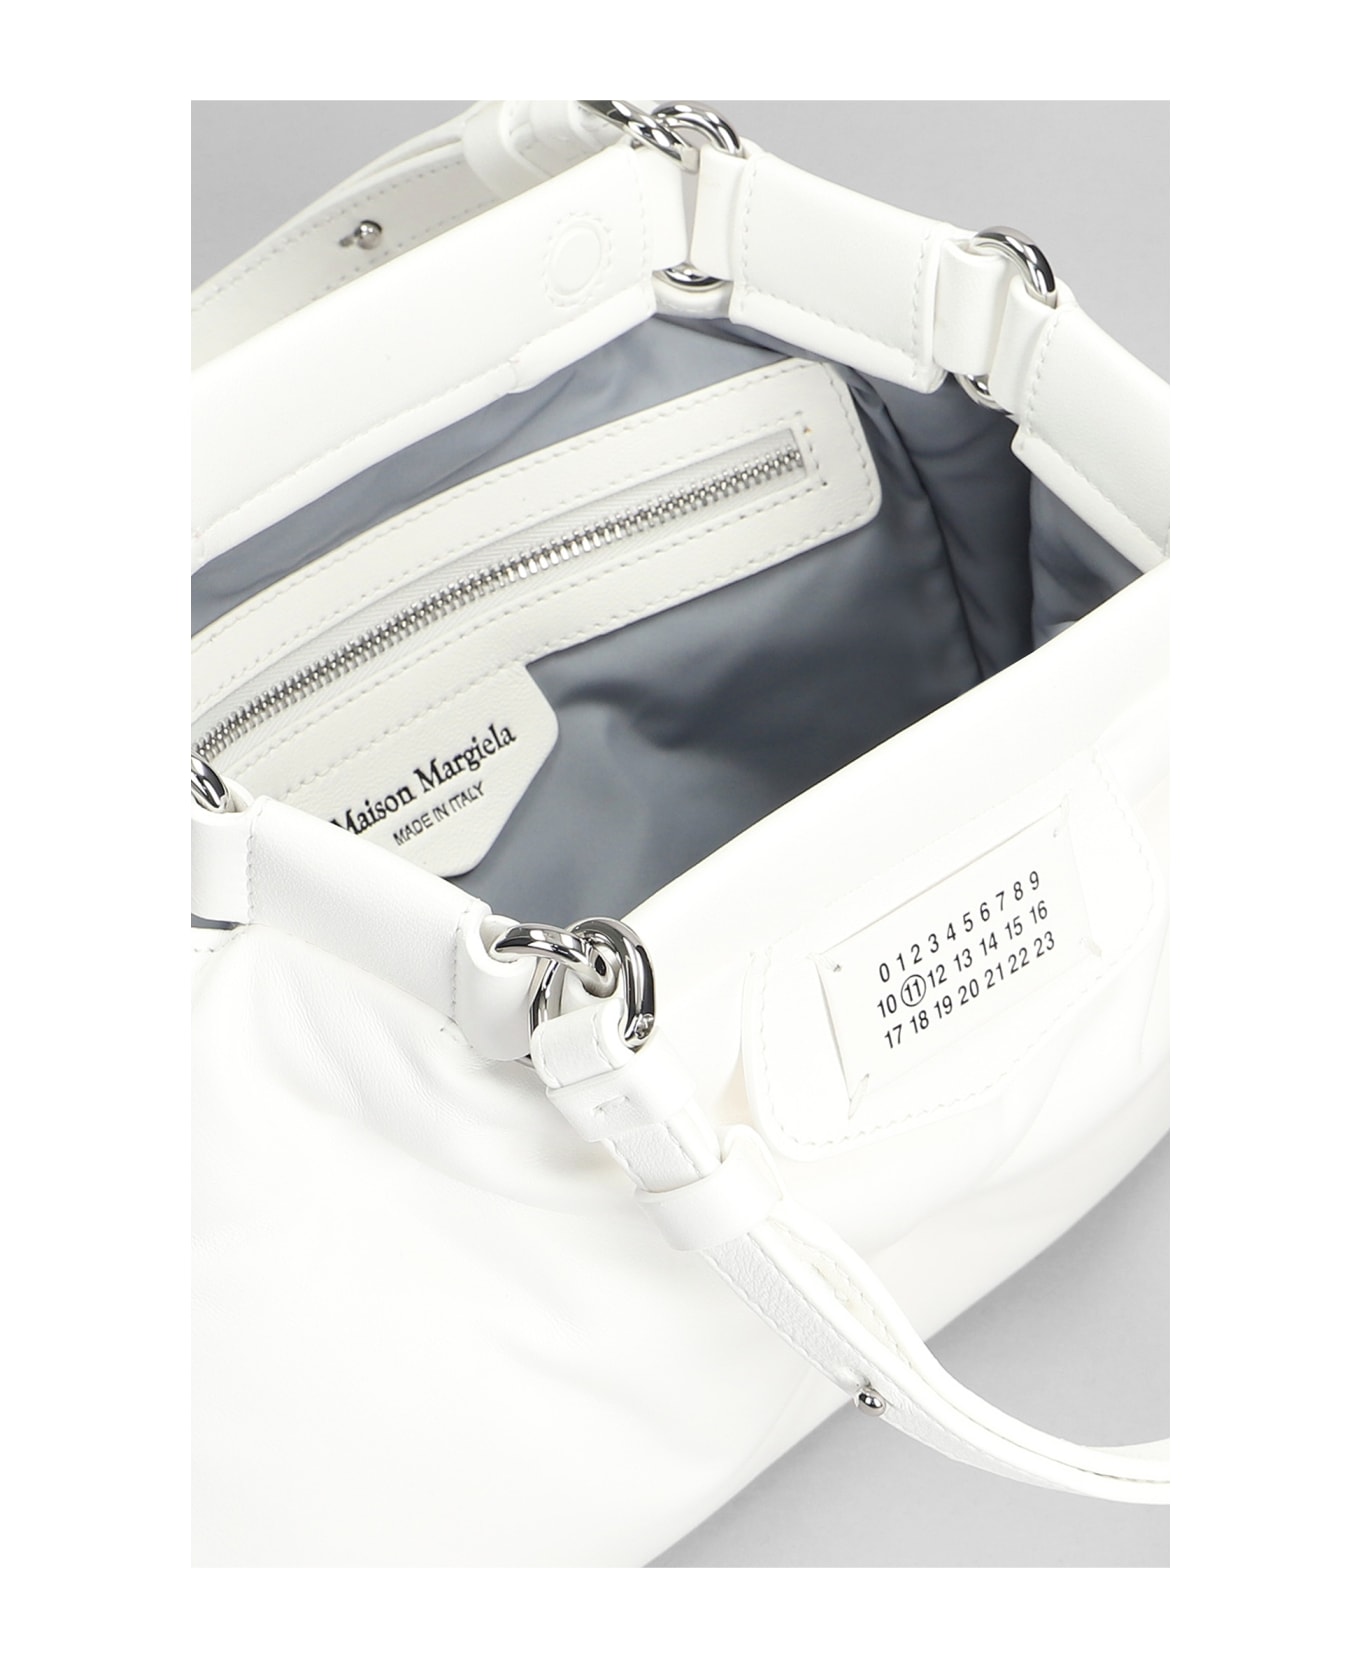 Maison Margiela Glam Slam Hand Bag In White Leather - white